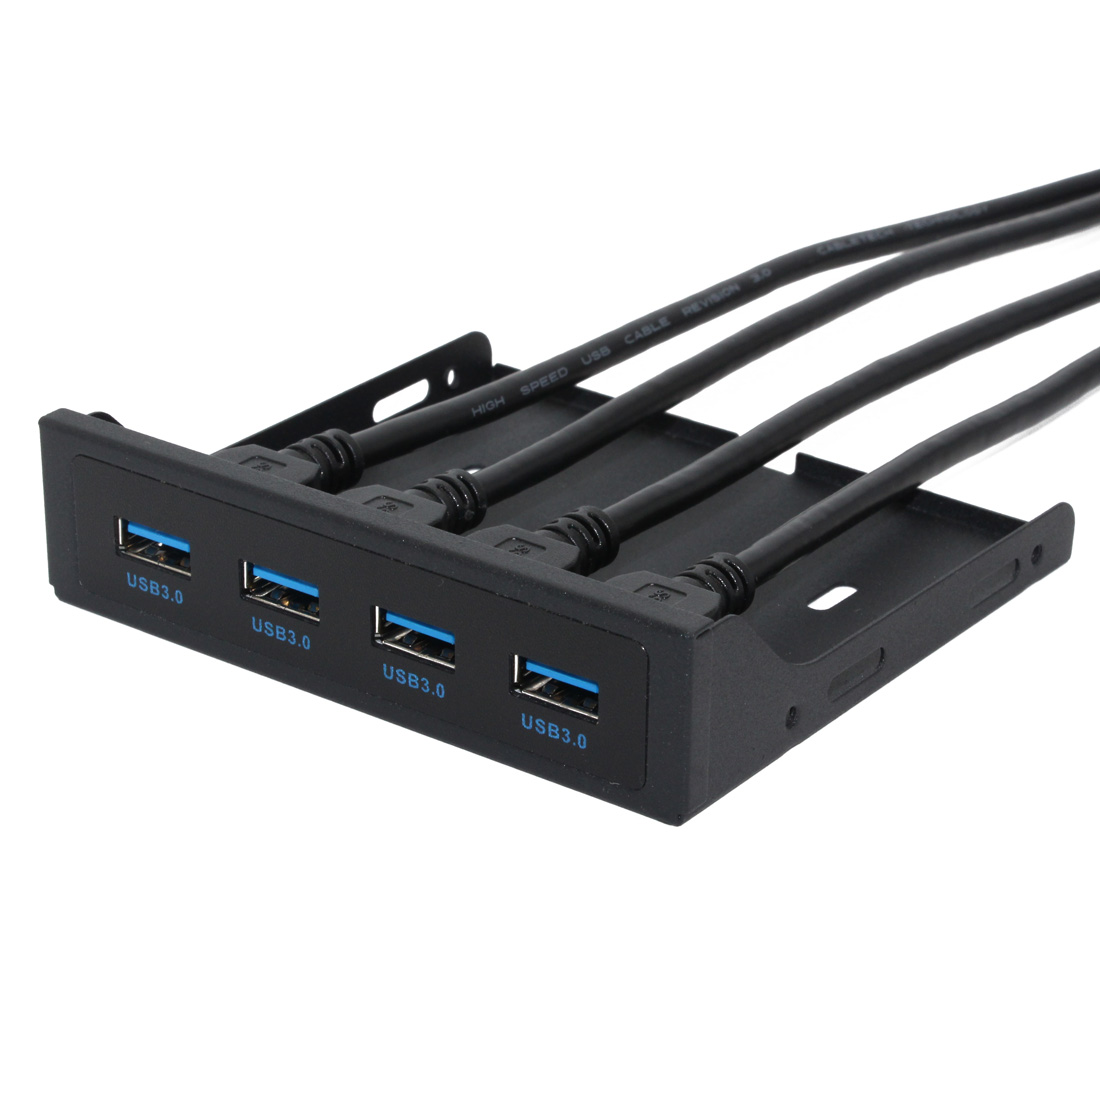 XT-XINTE Front Panel 4 Ports USB 3.0 HUB Splitter Combo Adapter Bracket ...